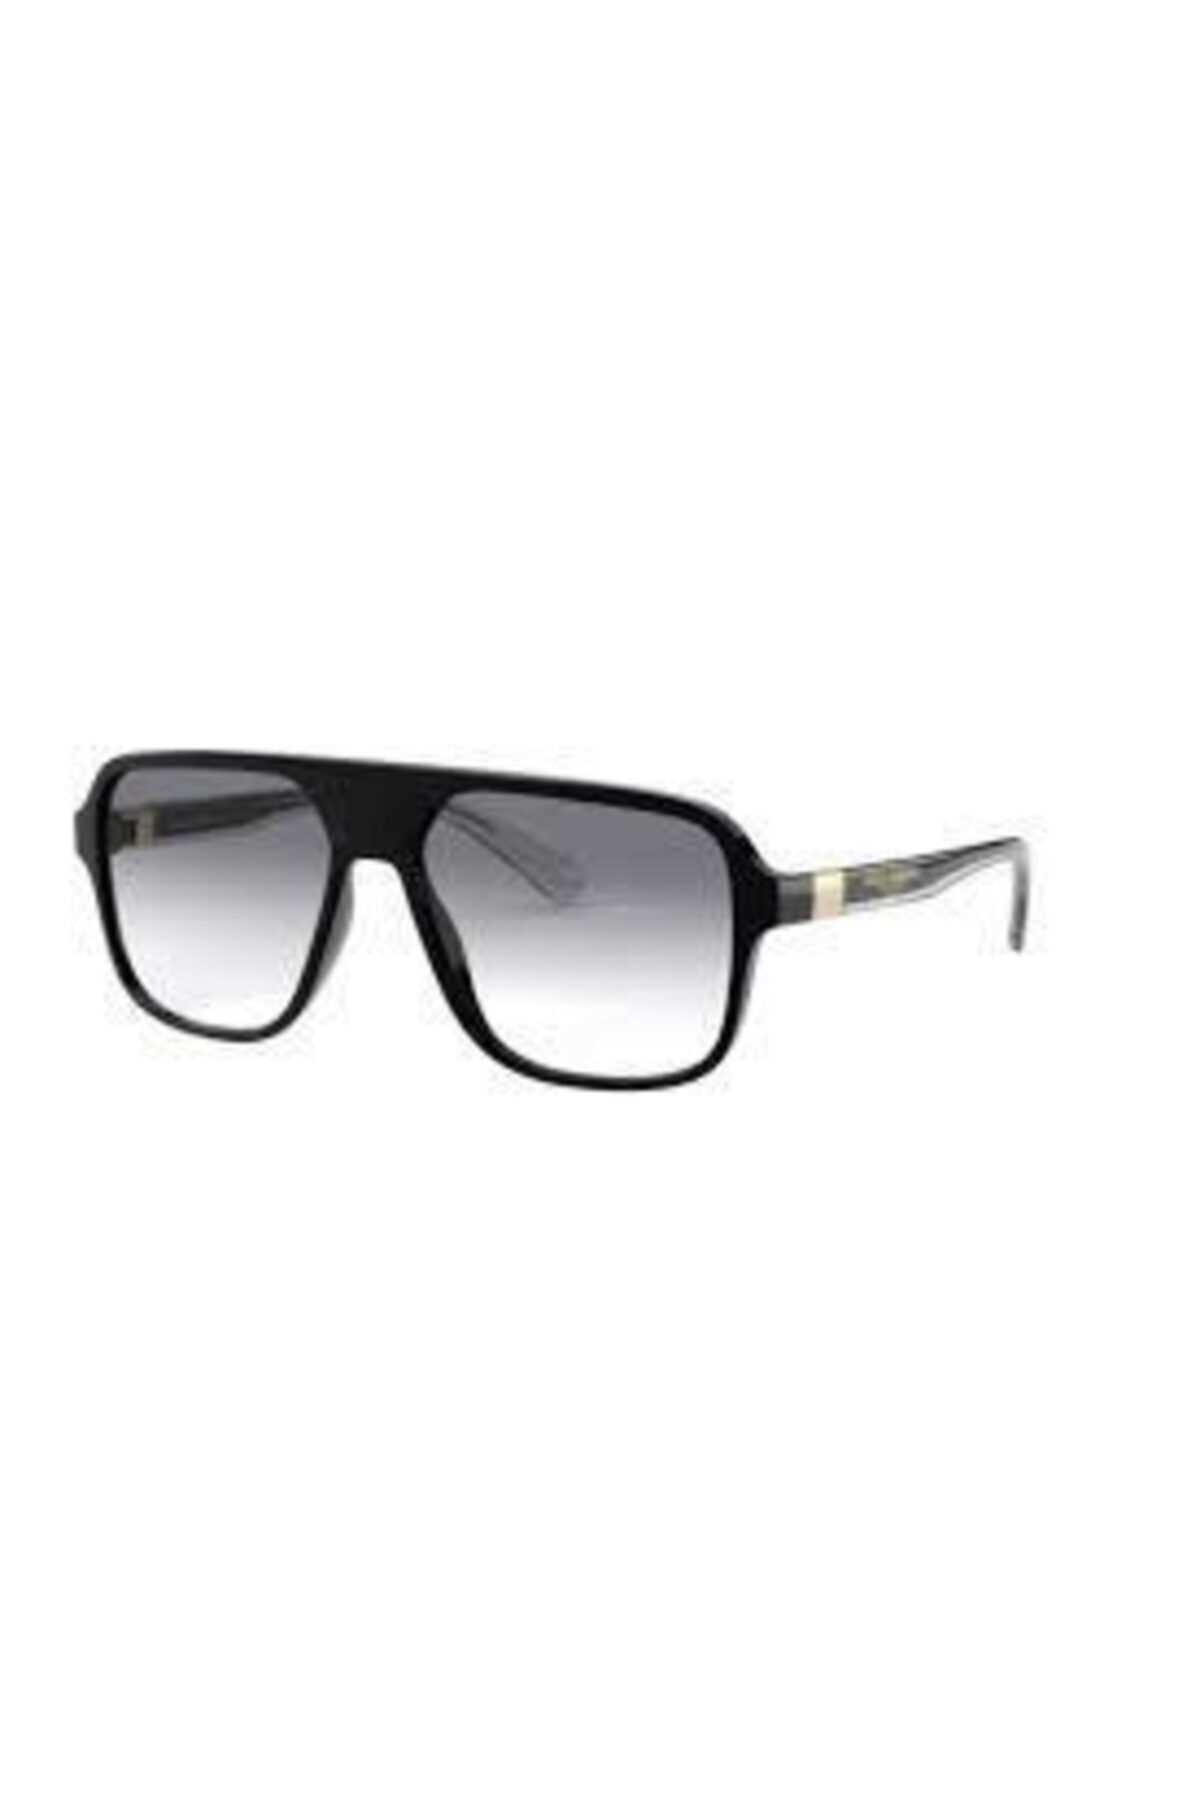 خرید پستی عینک دودی شیک برند Dolce Gabbana Sunglasses رنگ مشکی کد ty94371326